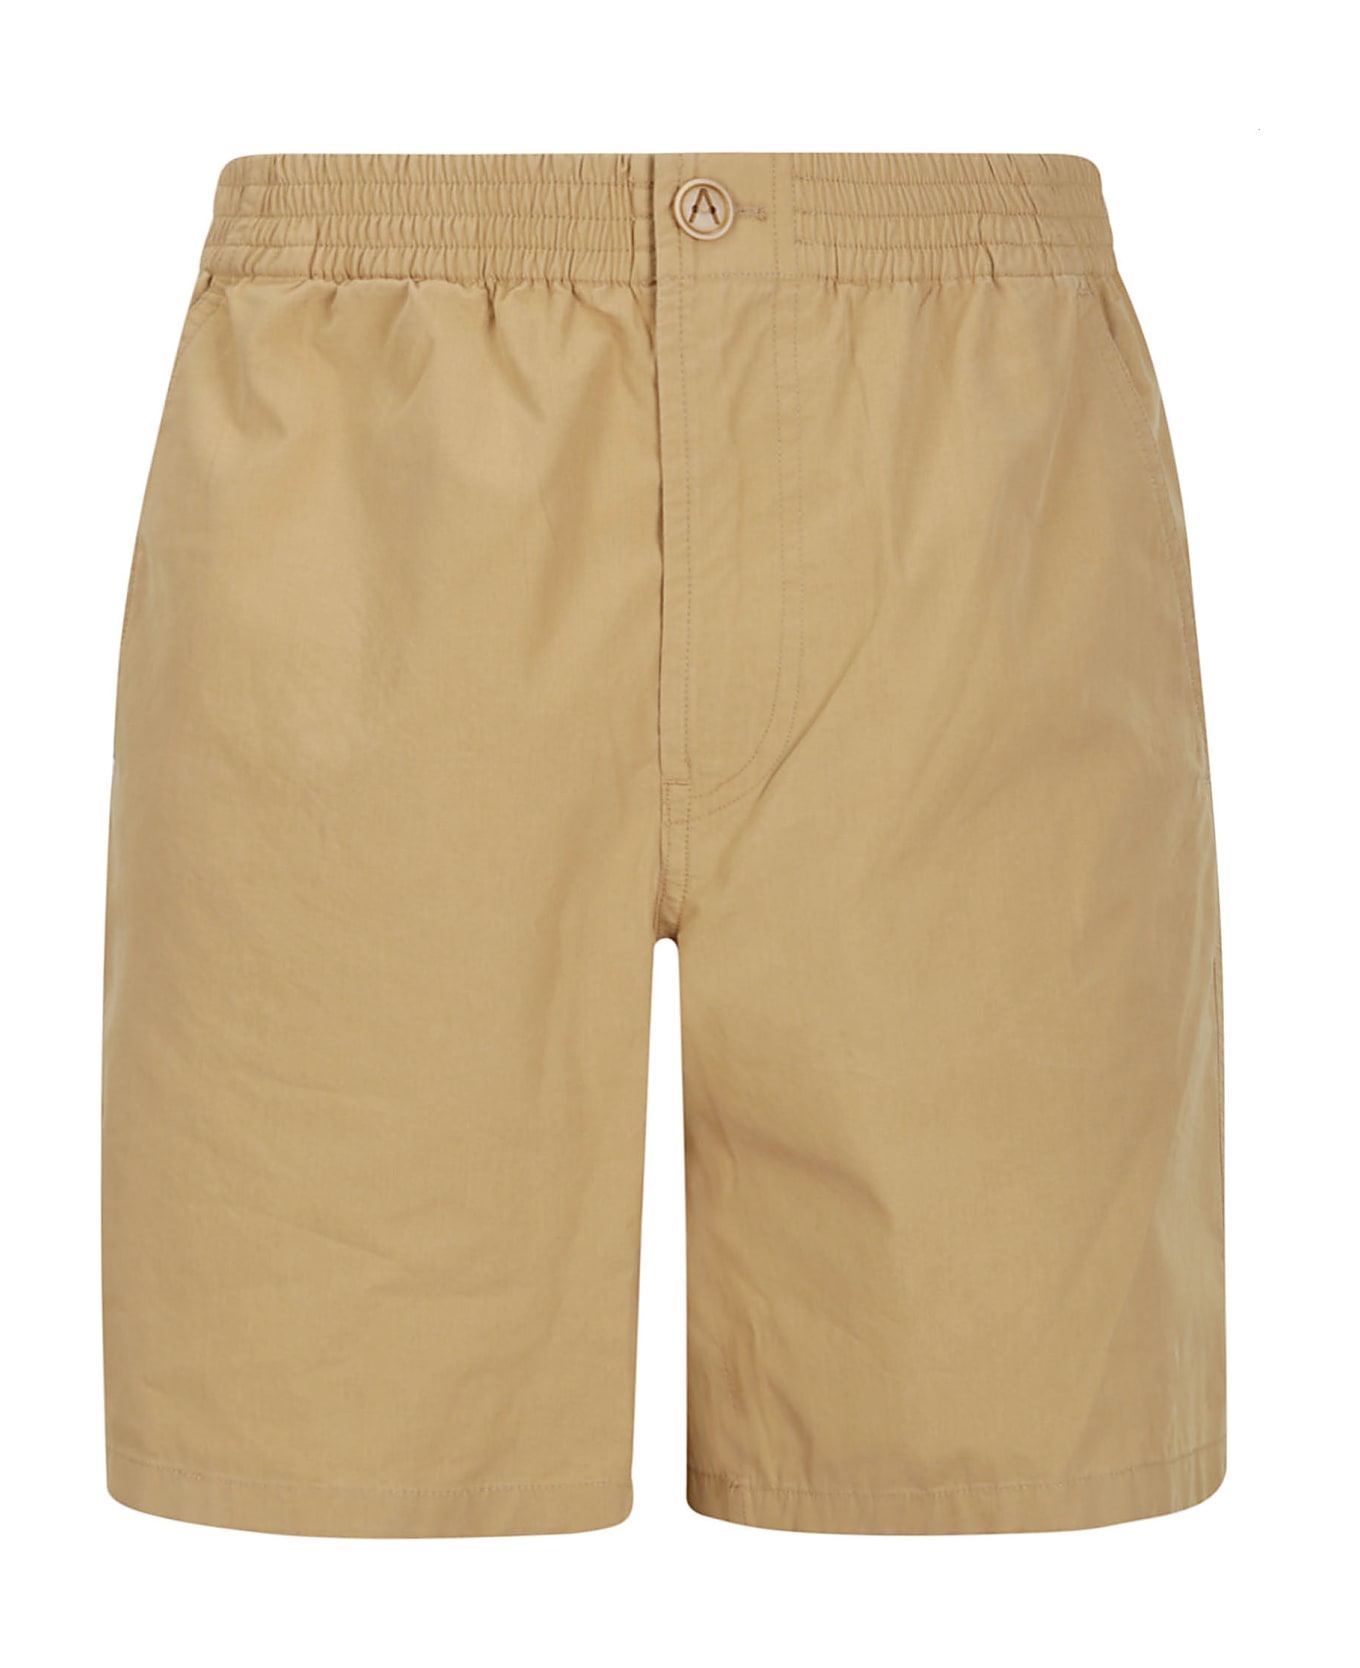 A.P.C. Button Detailed High Waist Shorts - BAA BEIGE